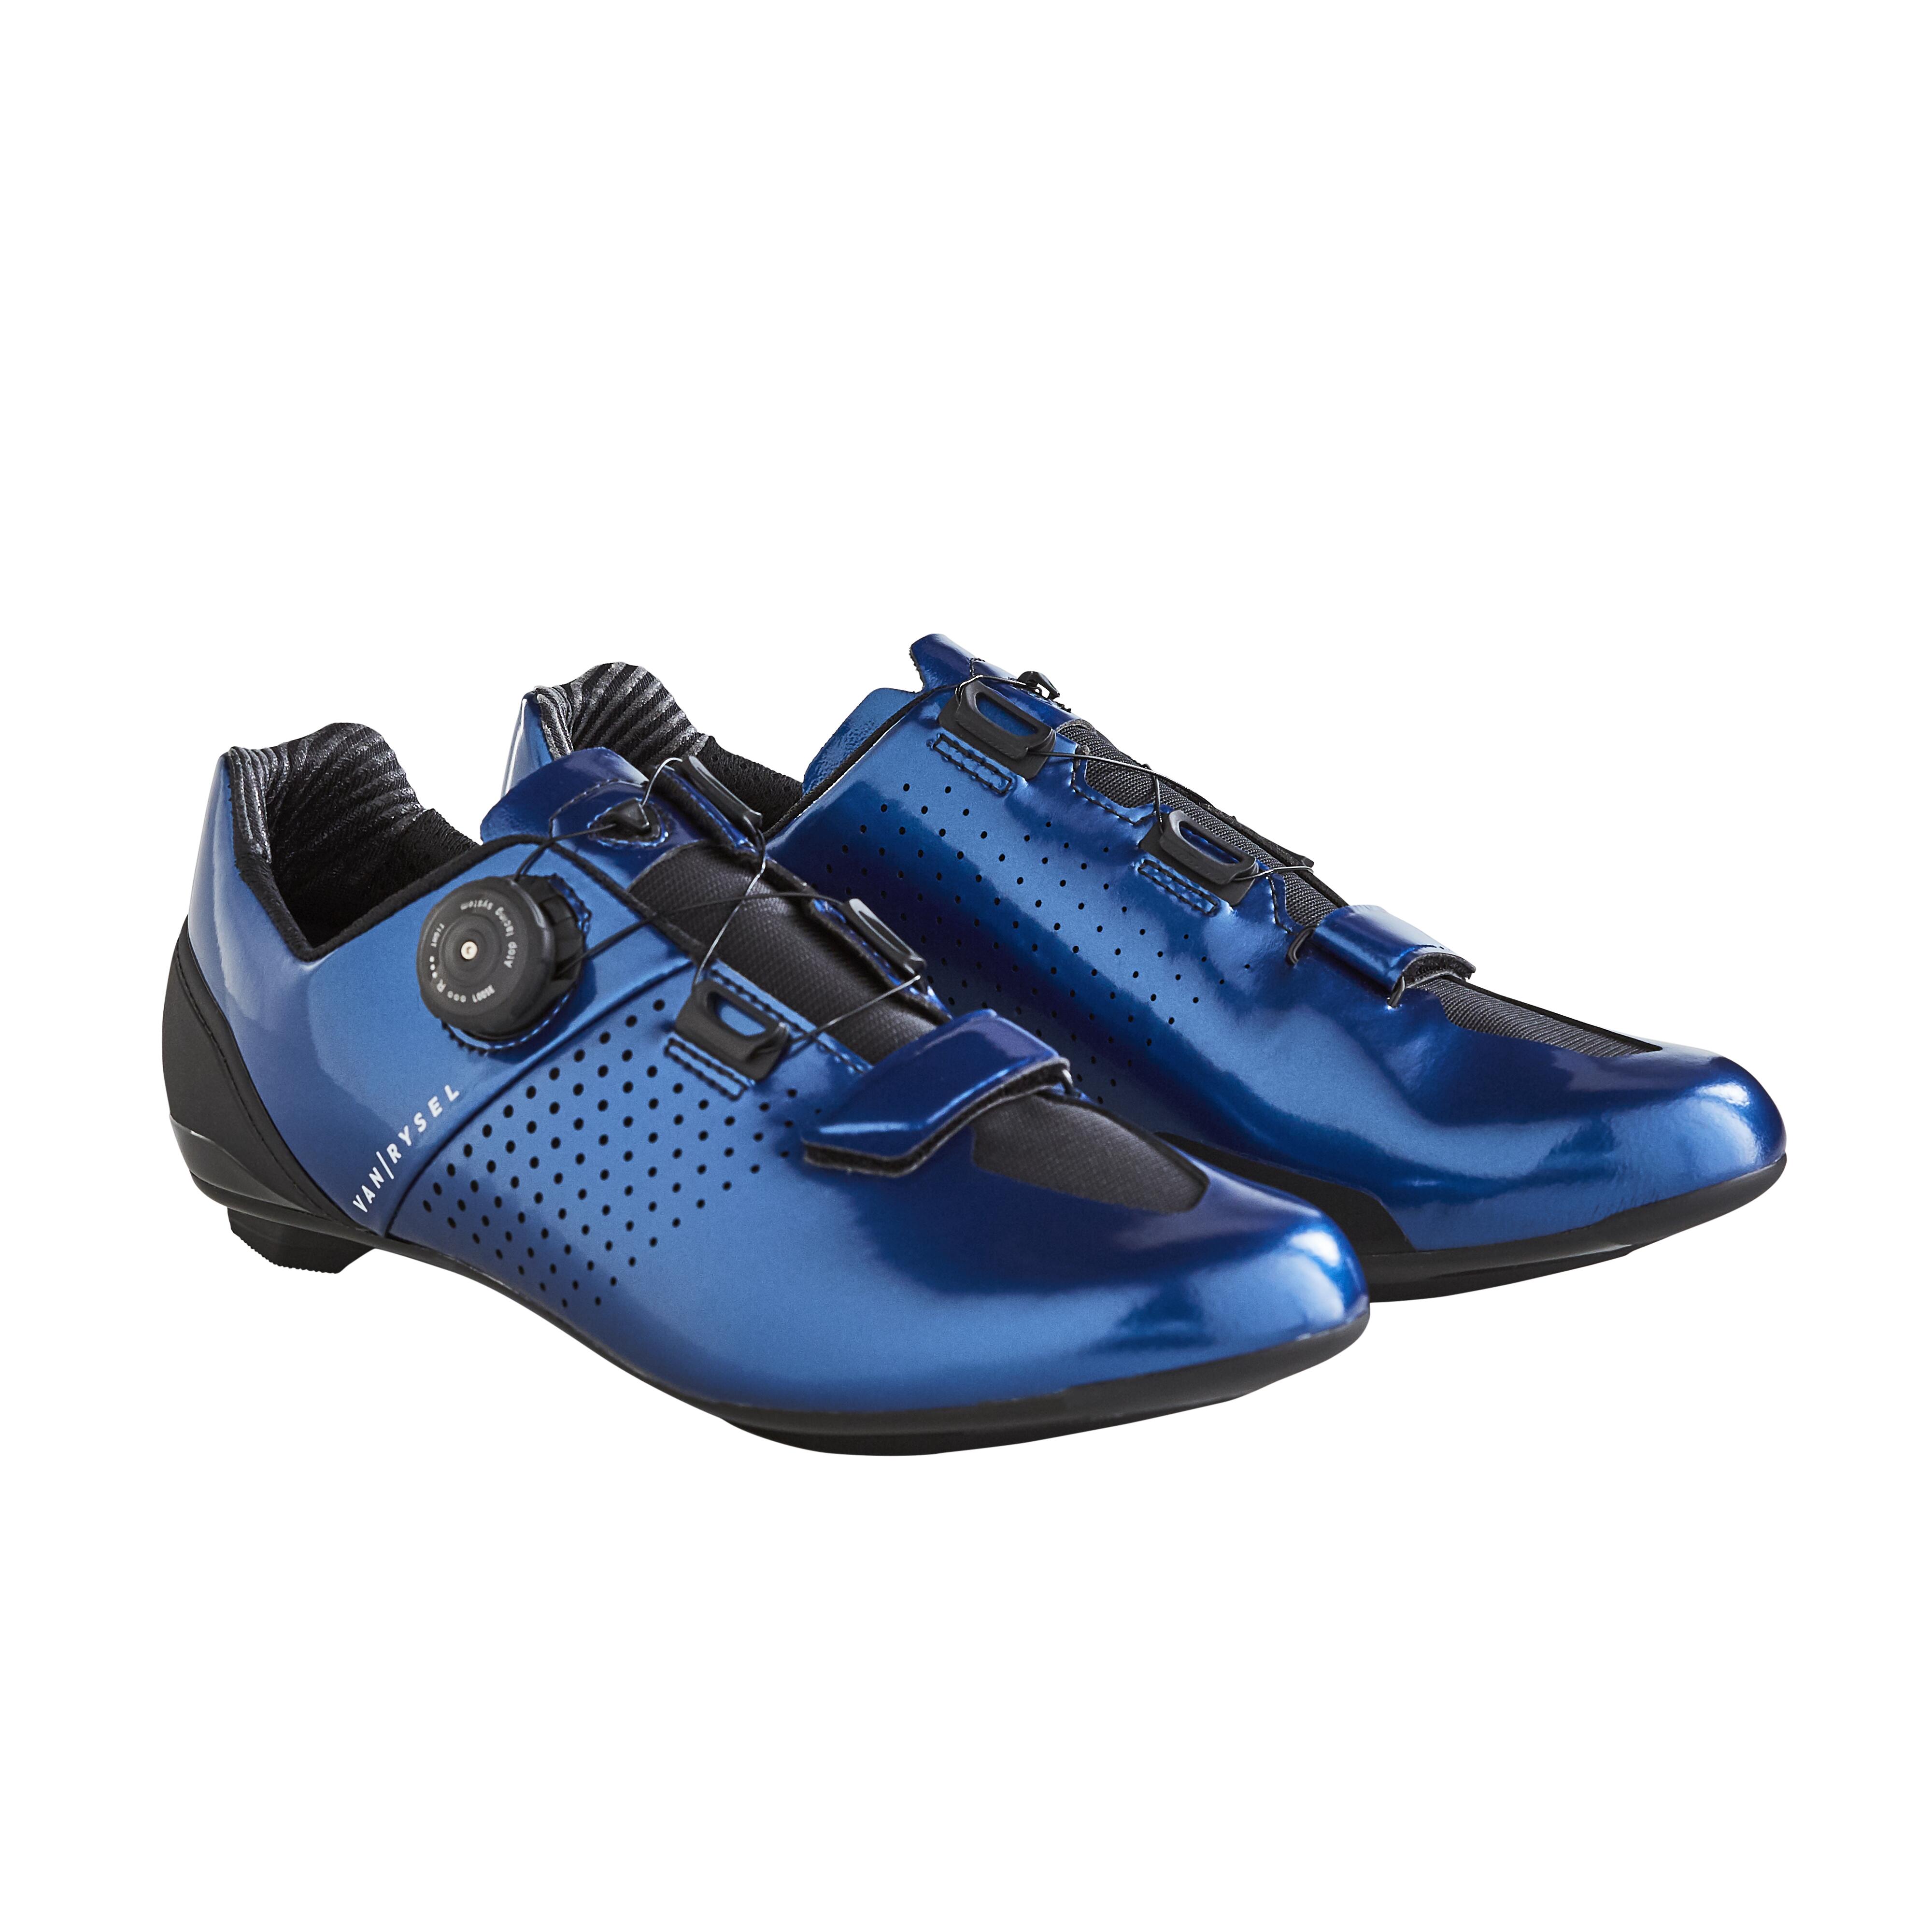 van rysel decathlon - scarpe ciclismo roadr 520 azzurre -